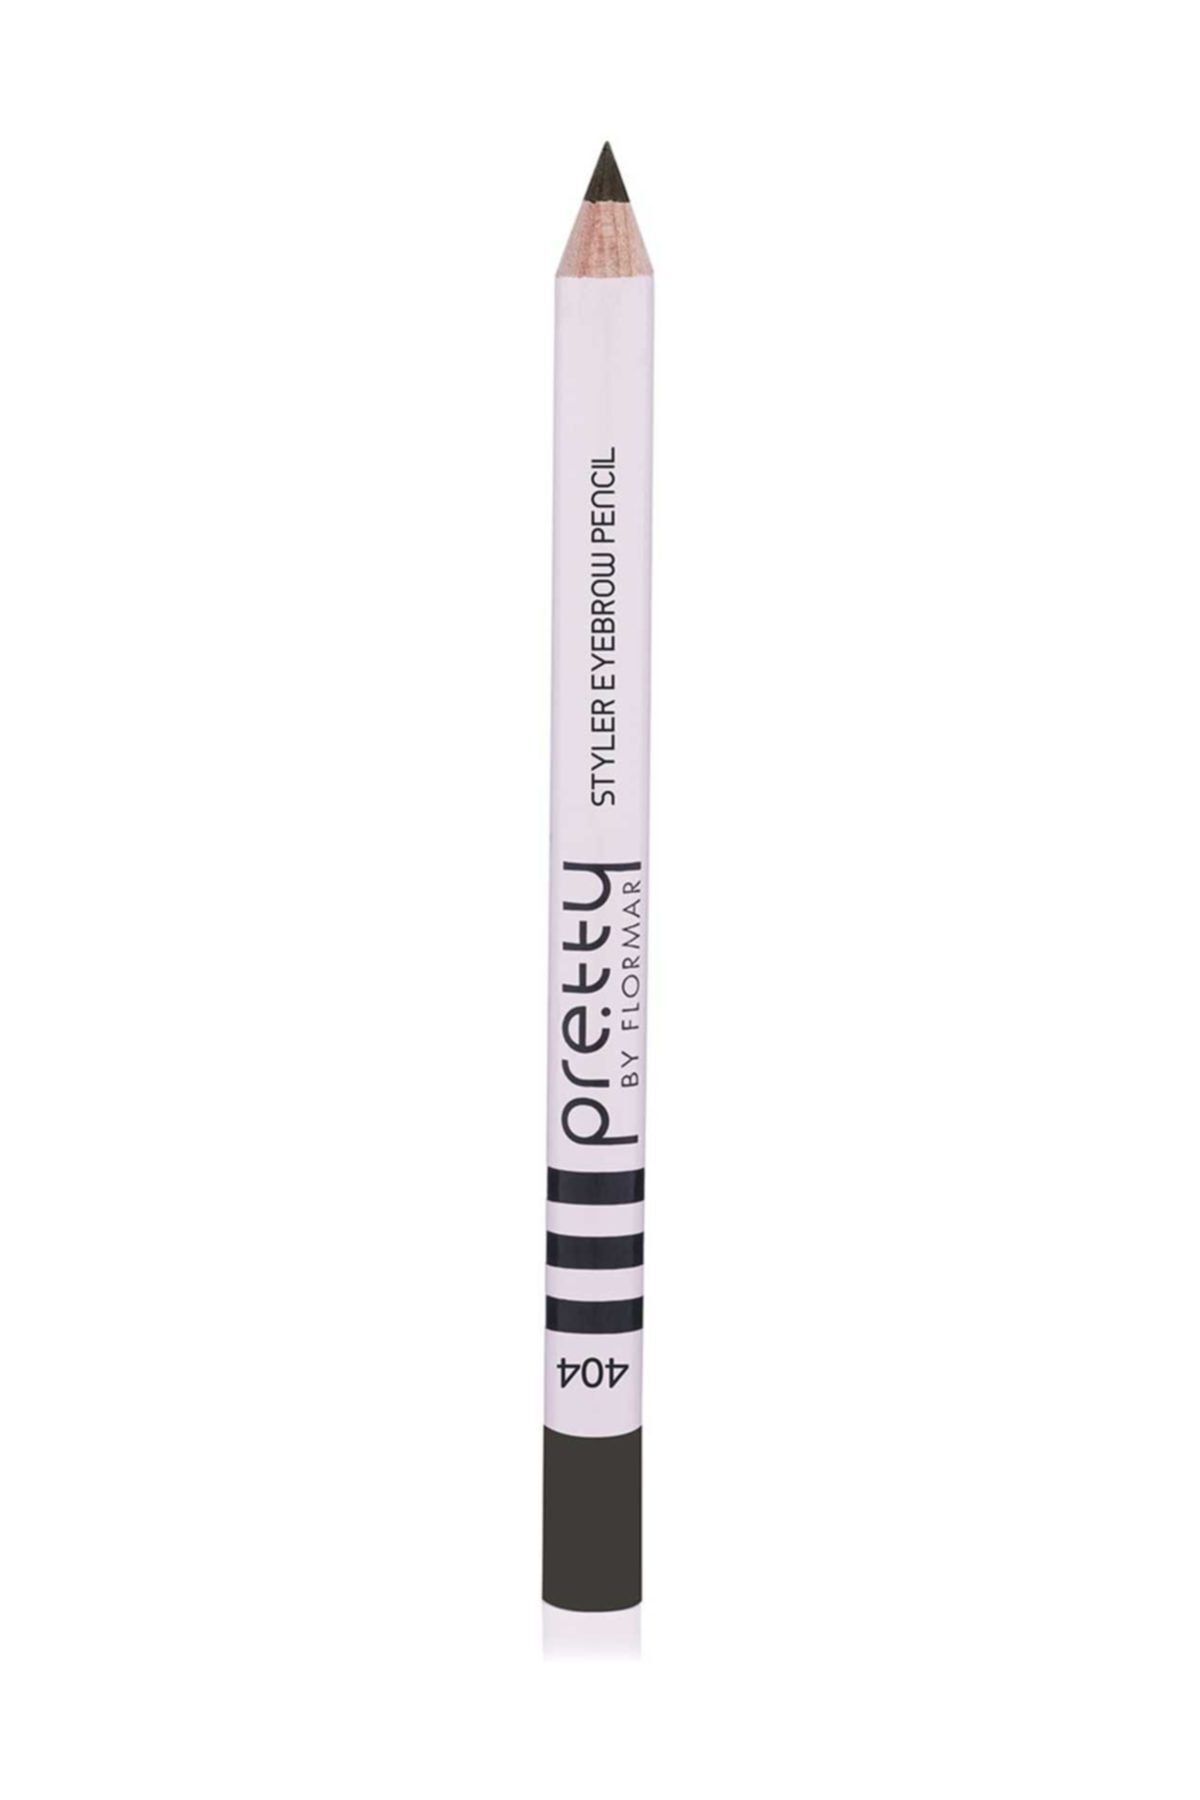 Flormar مداد ابرو قلم ابرو مدادی زیبا توسط فلورمار 404 مشکی تیره